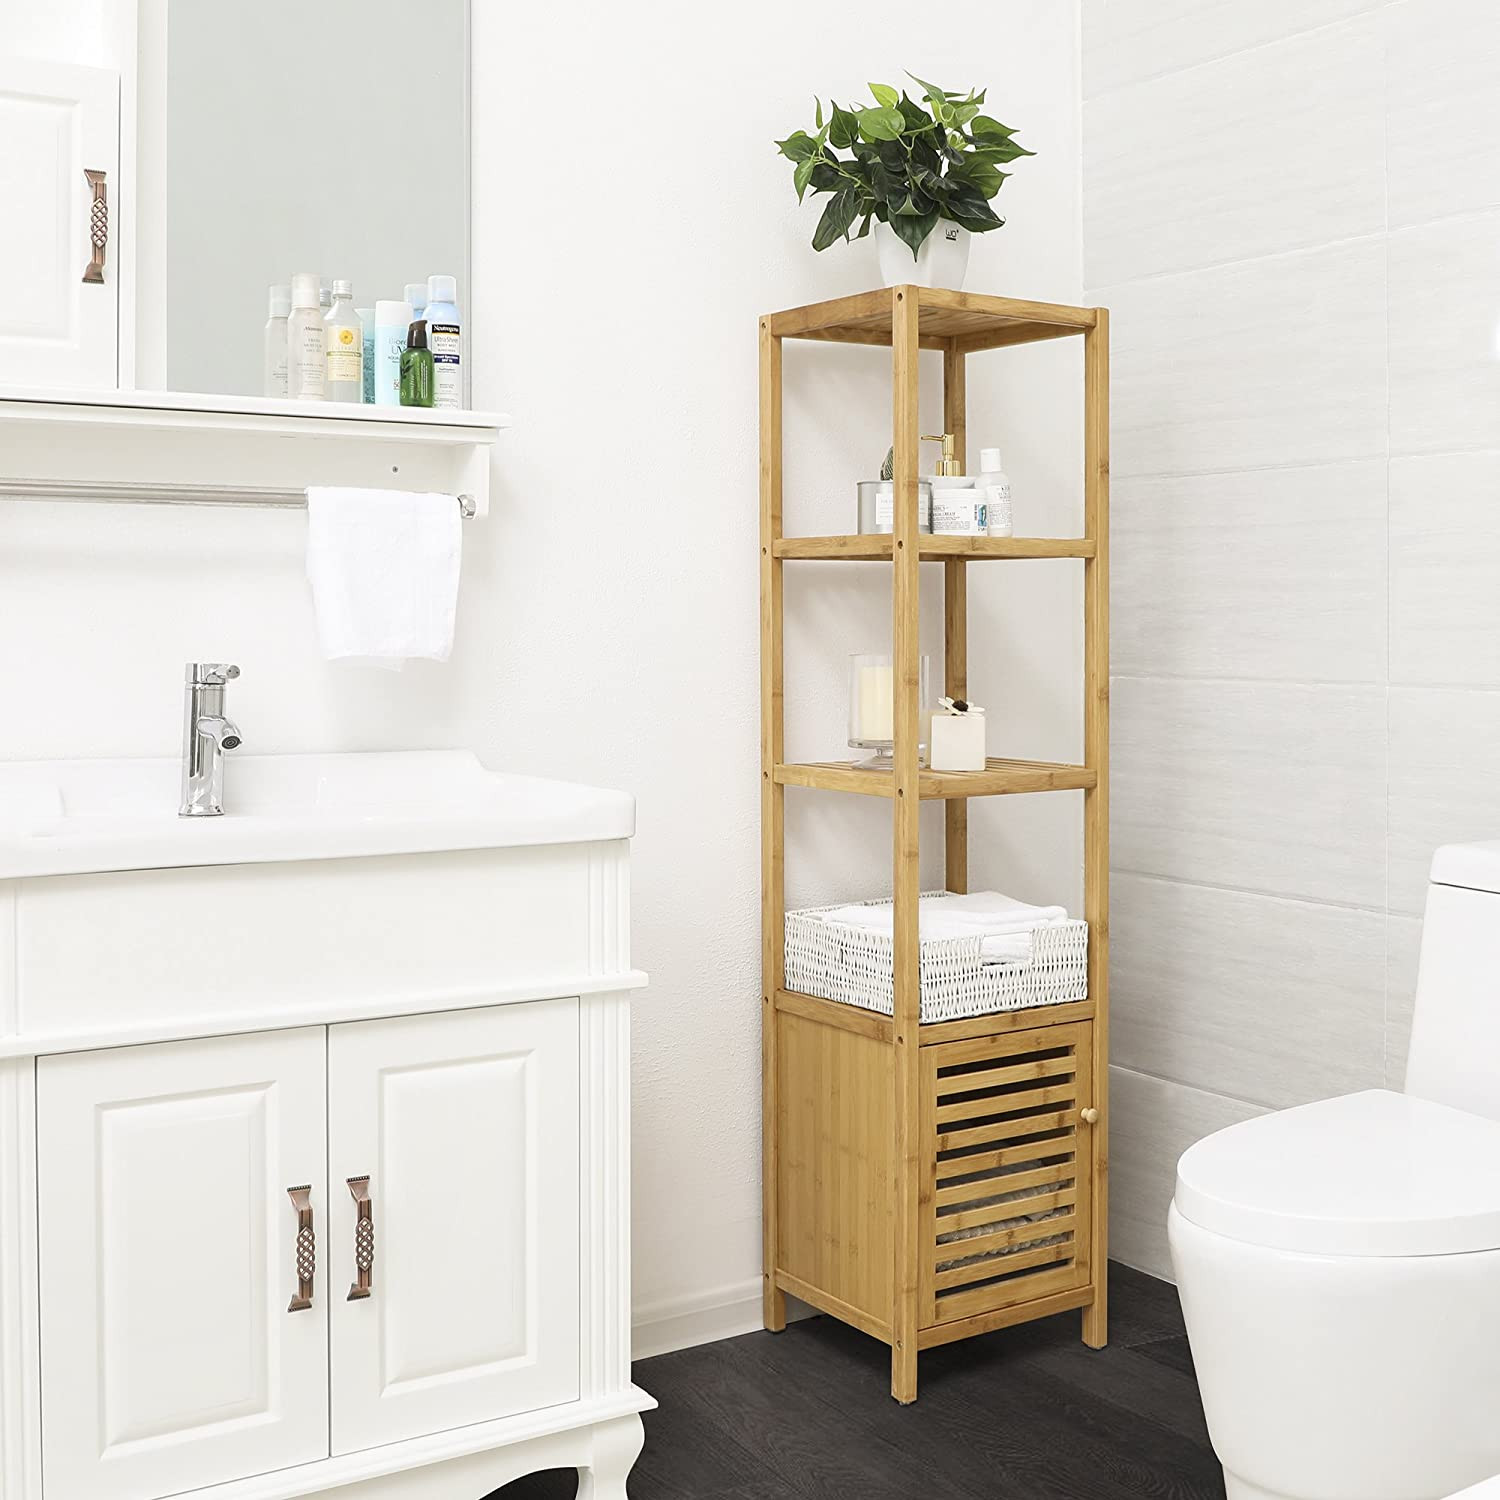 Small Bathroom Storage Cabinets
 8 Best Bathroom Storage Cabinets For Small Spaces in 2019